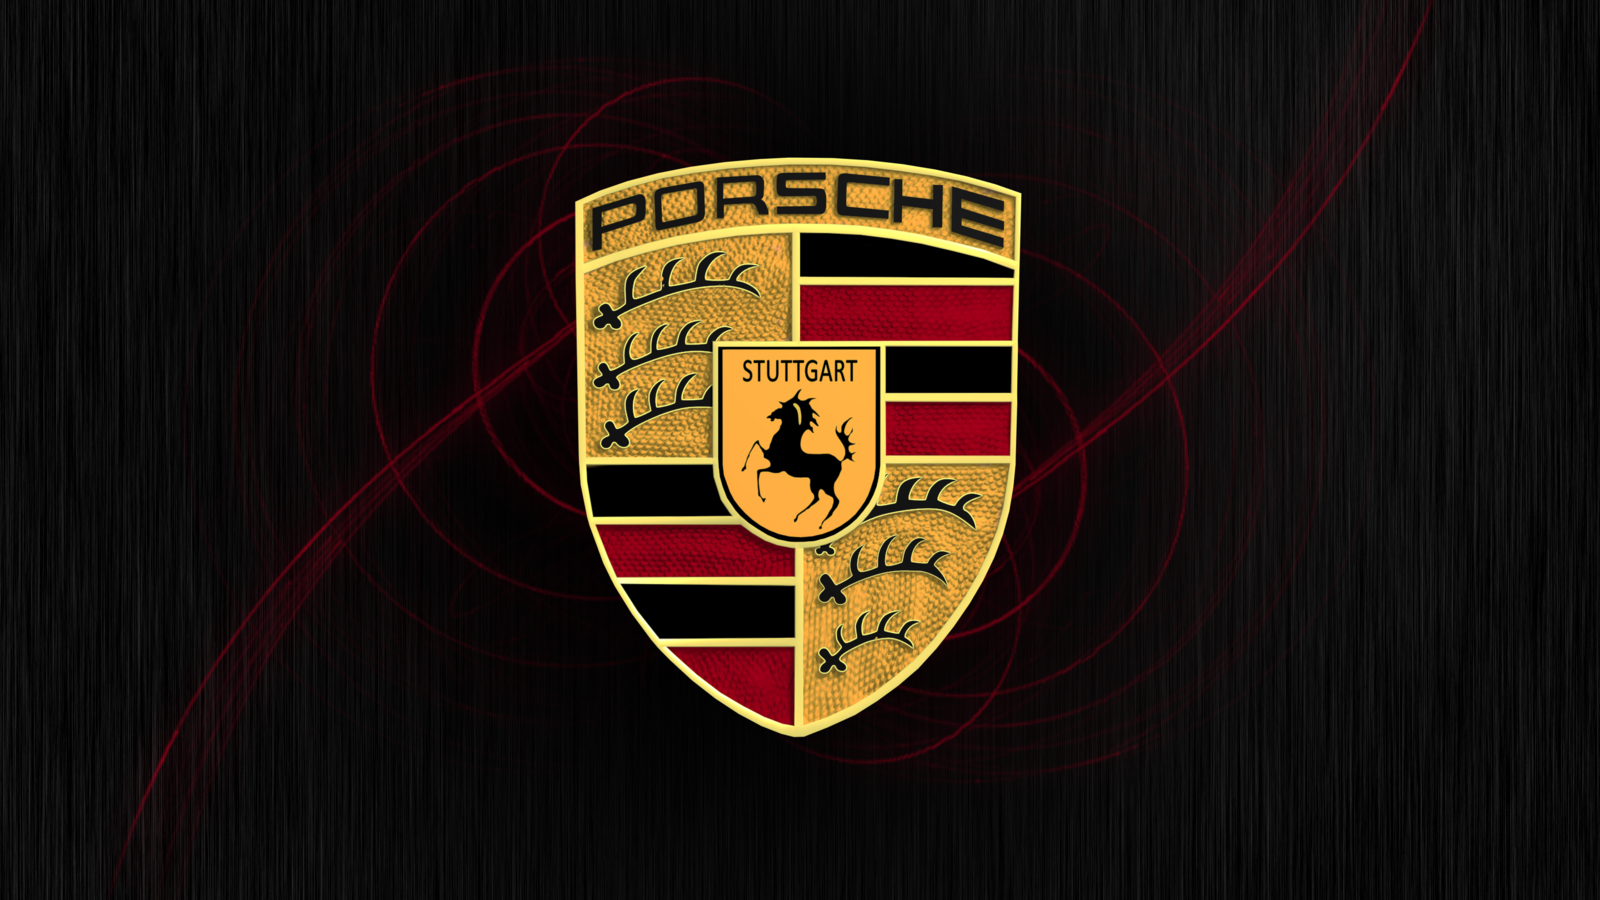 Porsche Logo Wallpaper